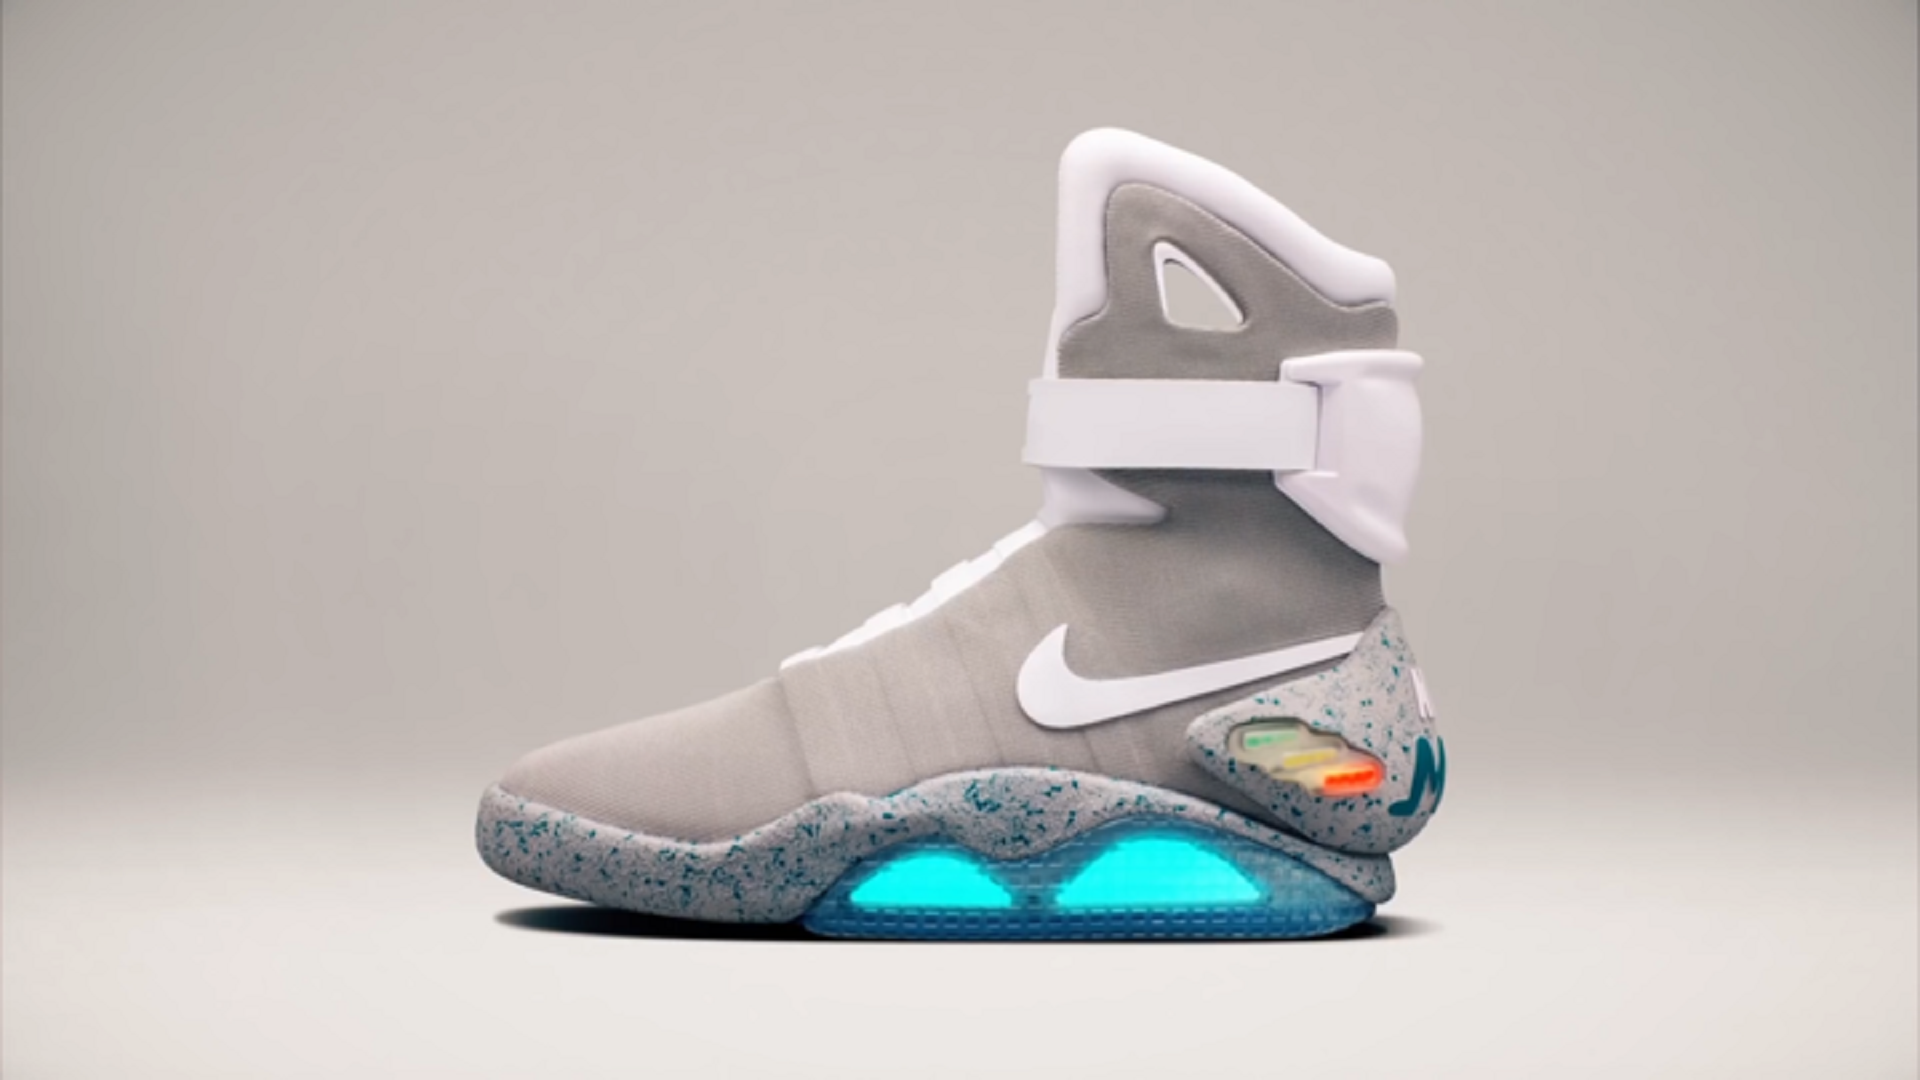 Intolerable Demostrar veneno Nike Raffles 'Back to the Future' Self-Tying Shoes